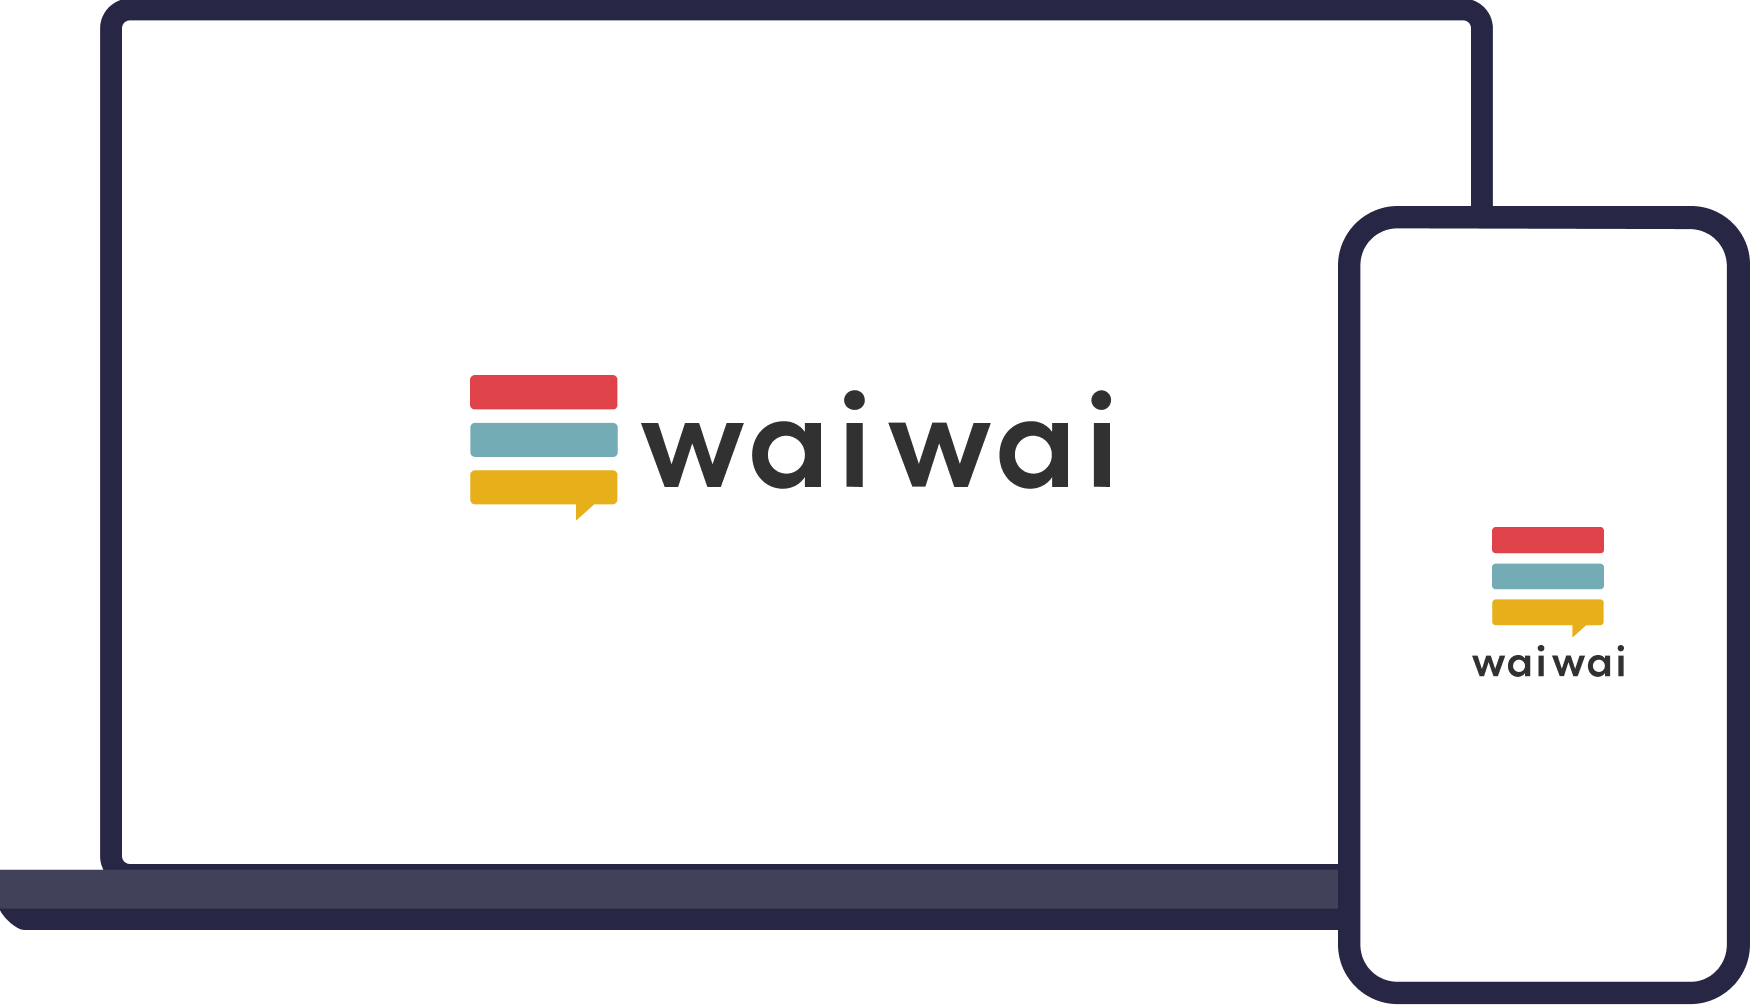 waiwai on devices